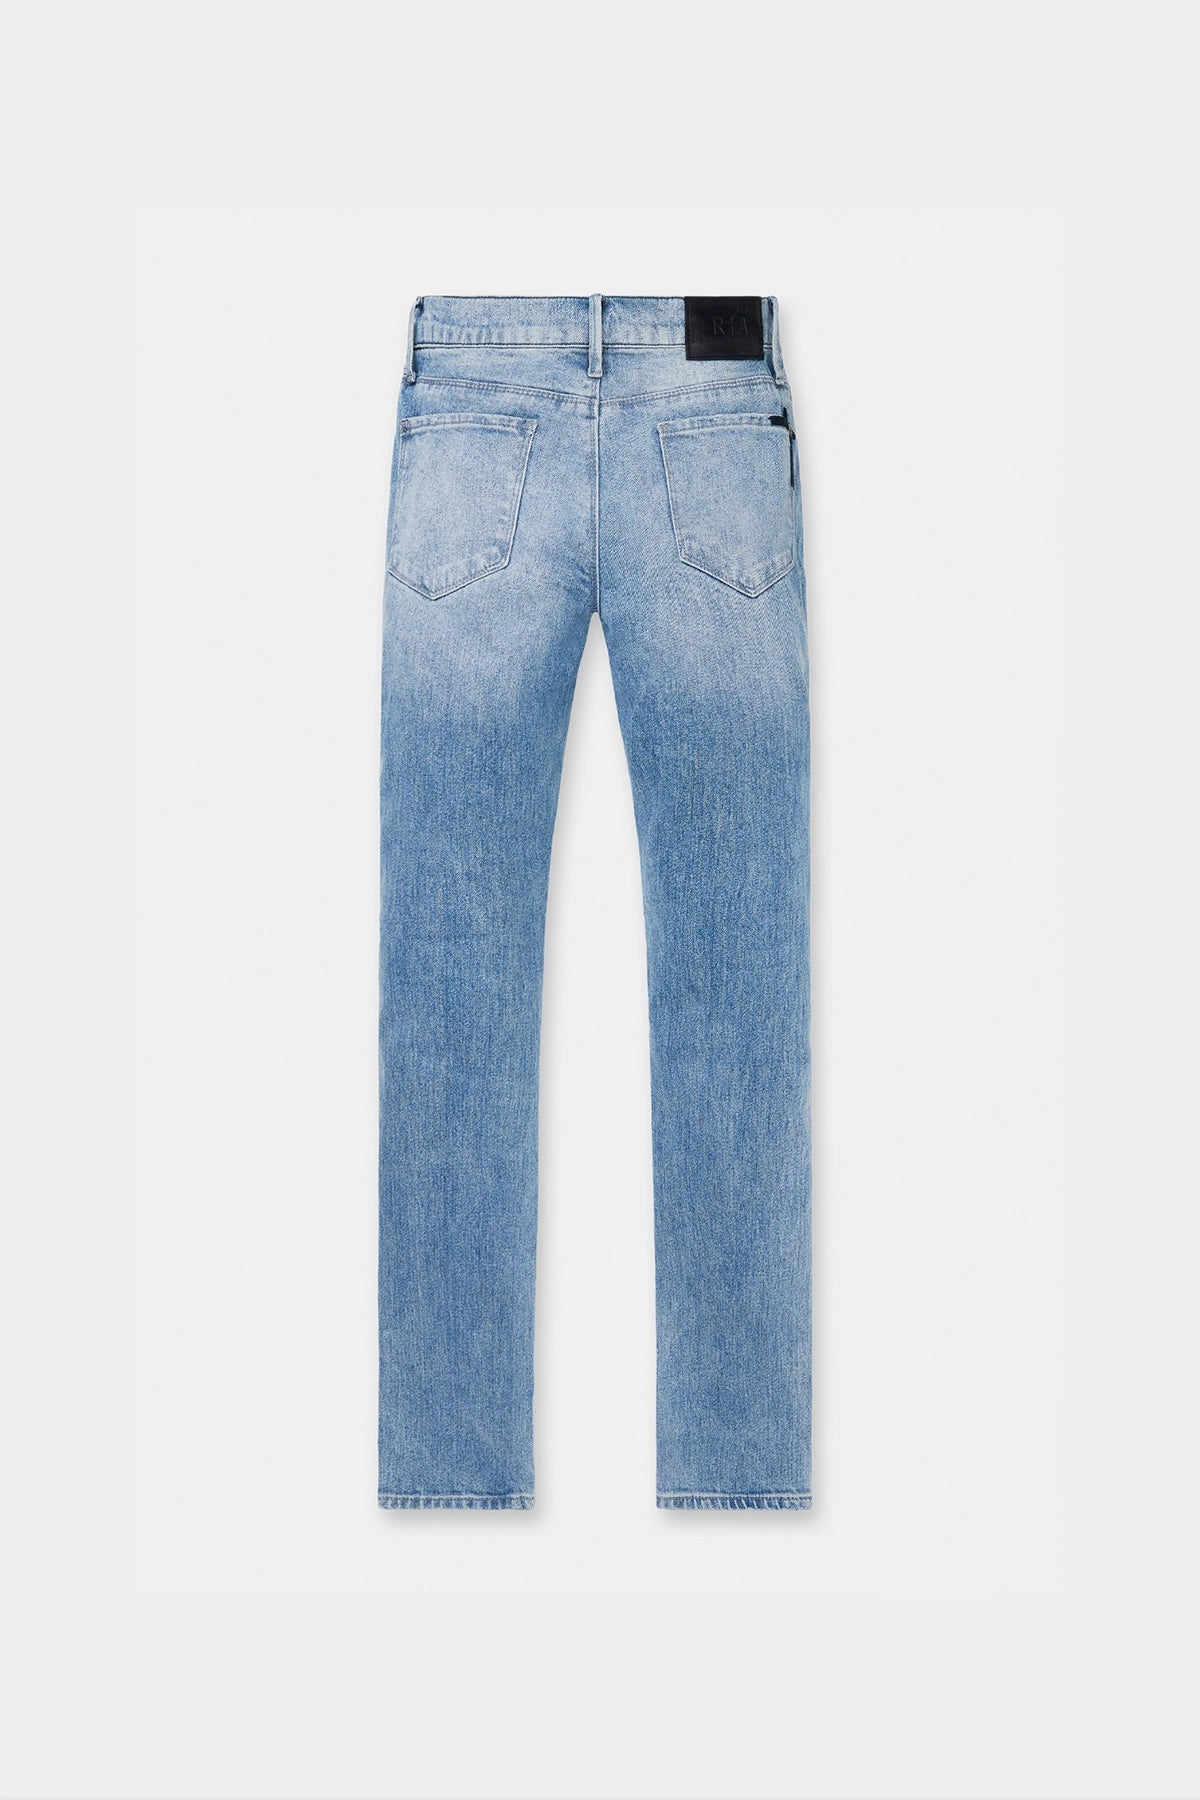 Buy Aeropostale Men Light Blue Skinny Fit Stone Wash Jeans - NNNOW.com